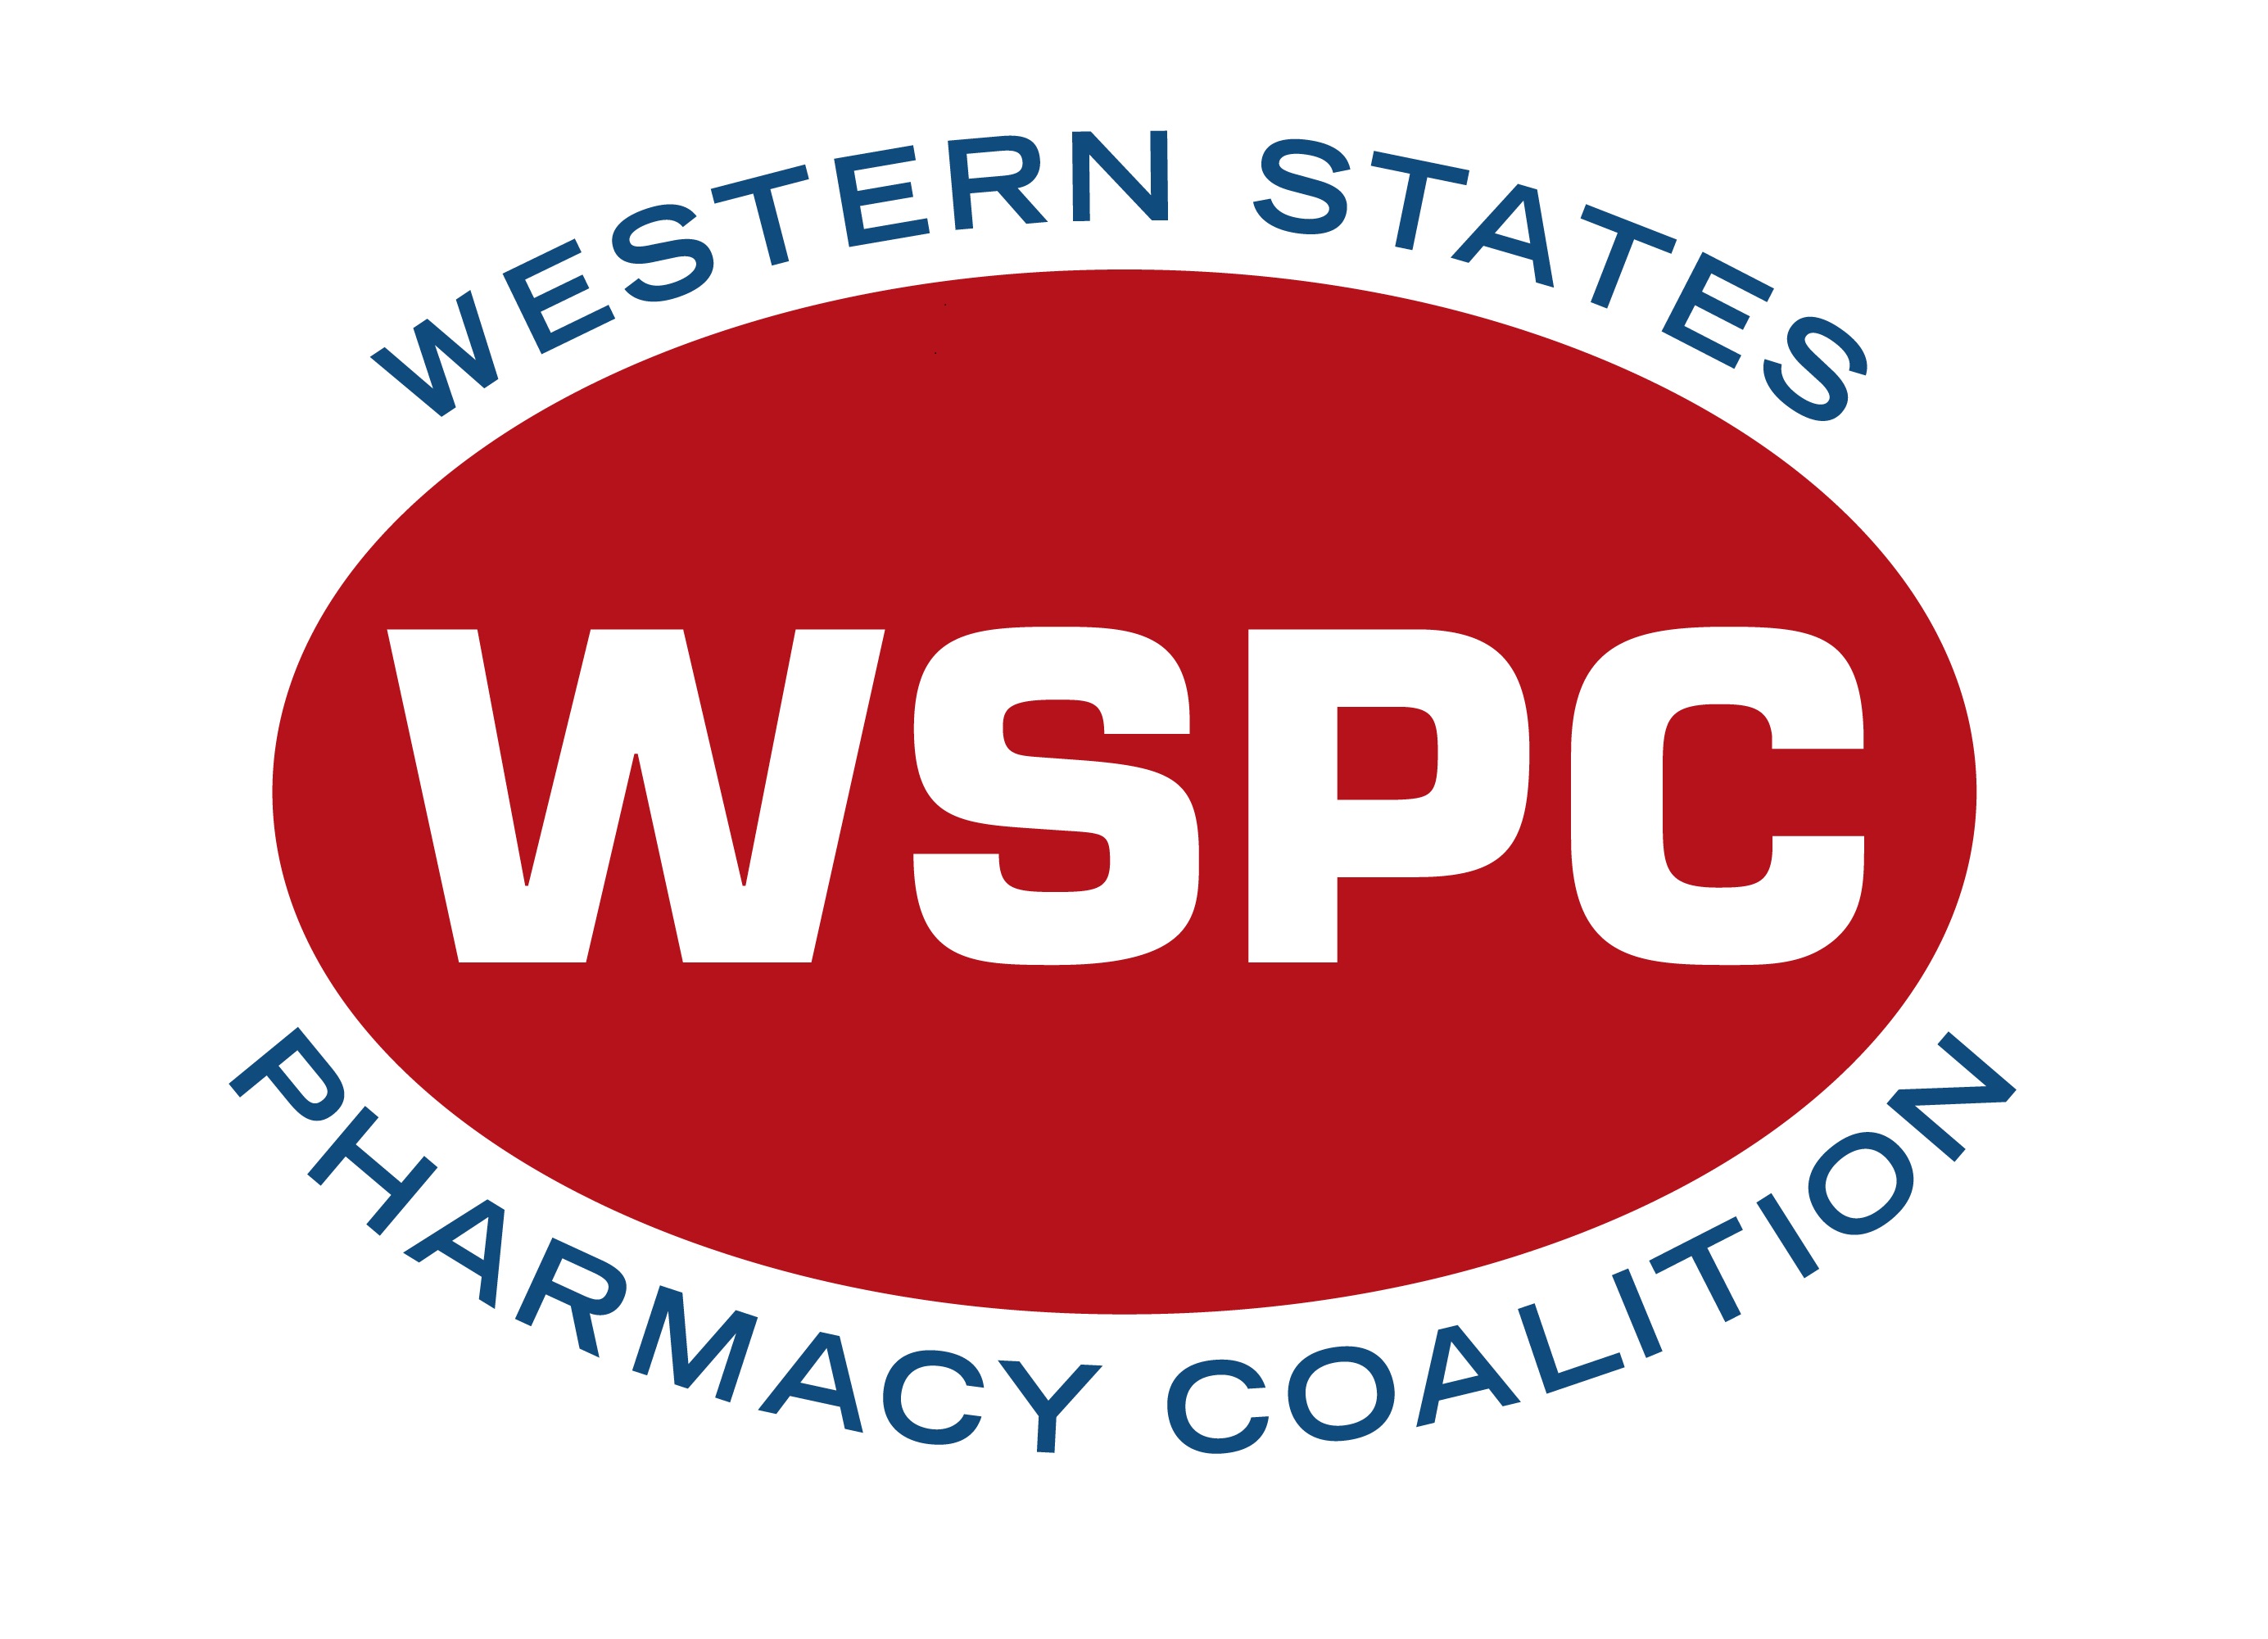 Western States Pharmacy Coalition